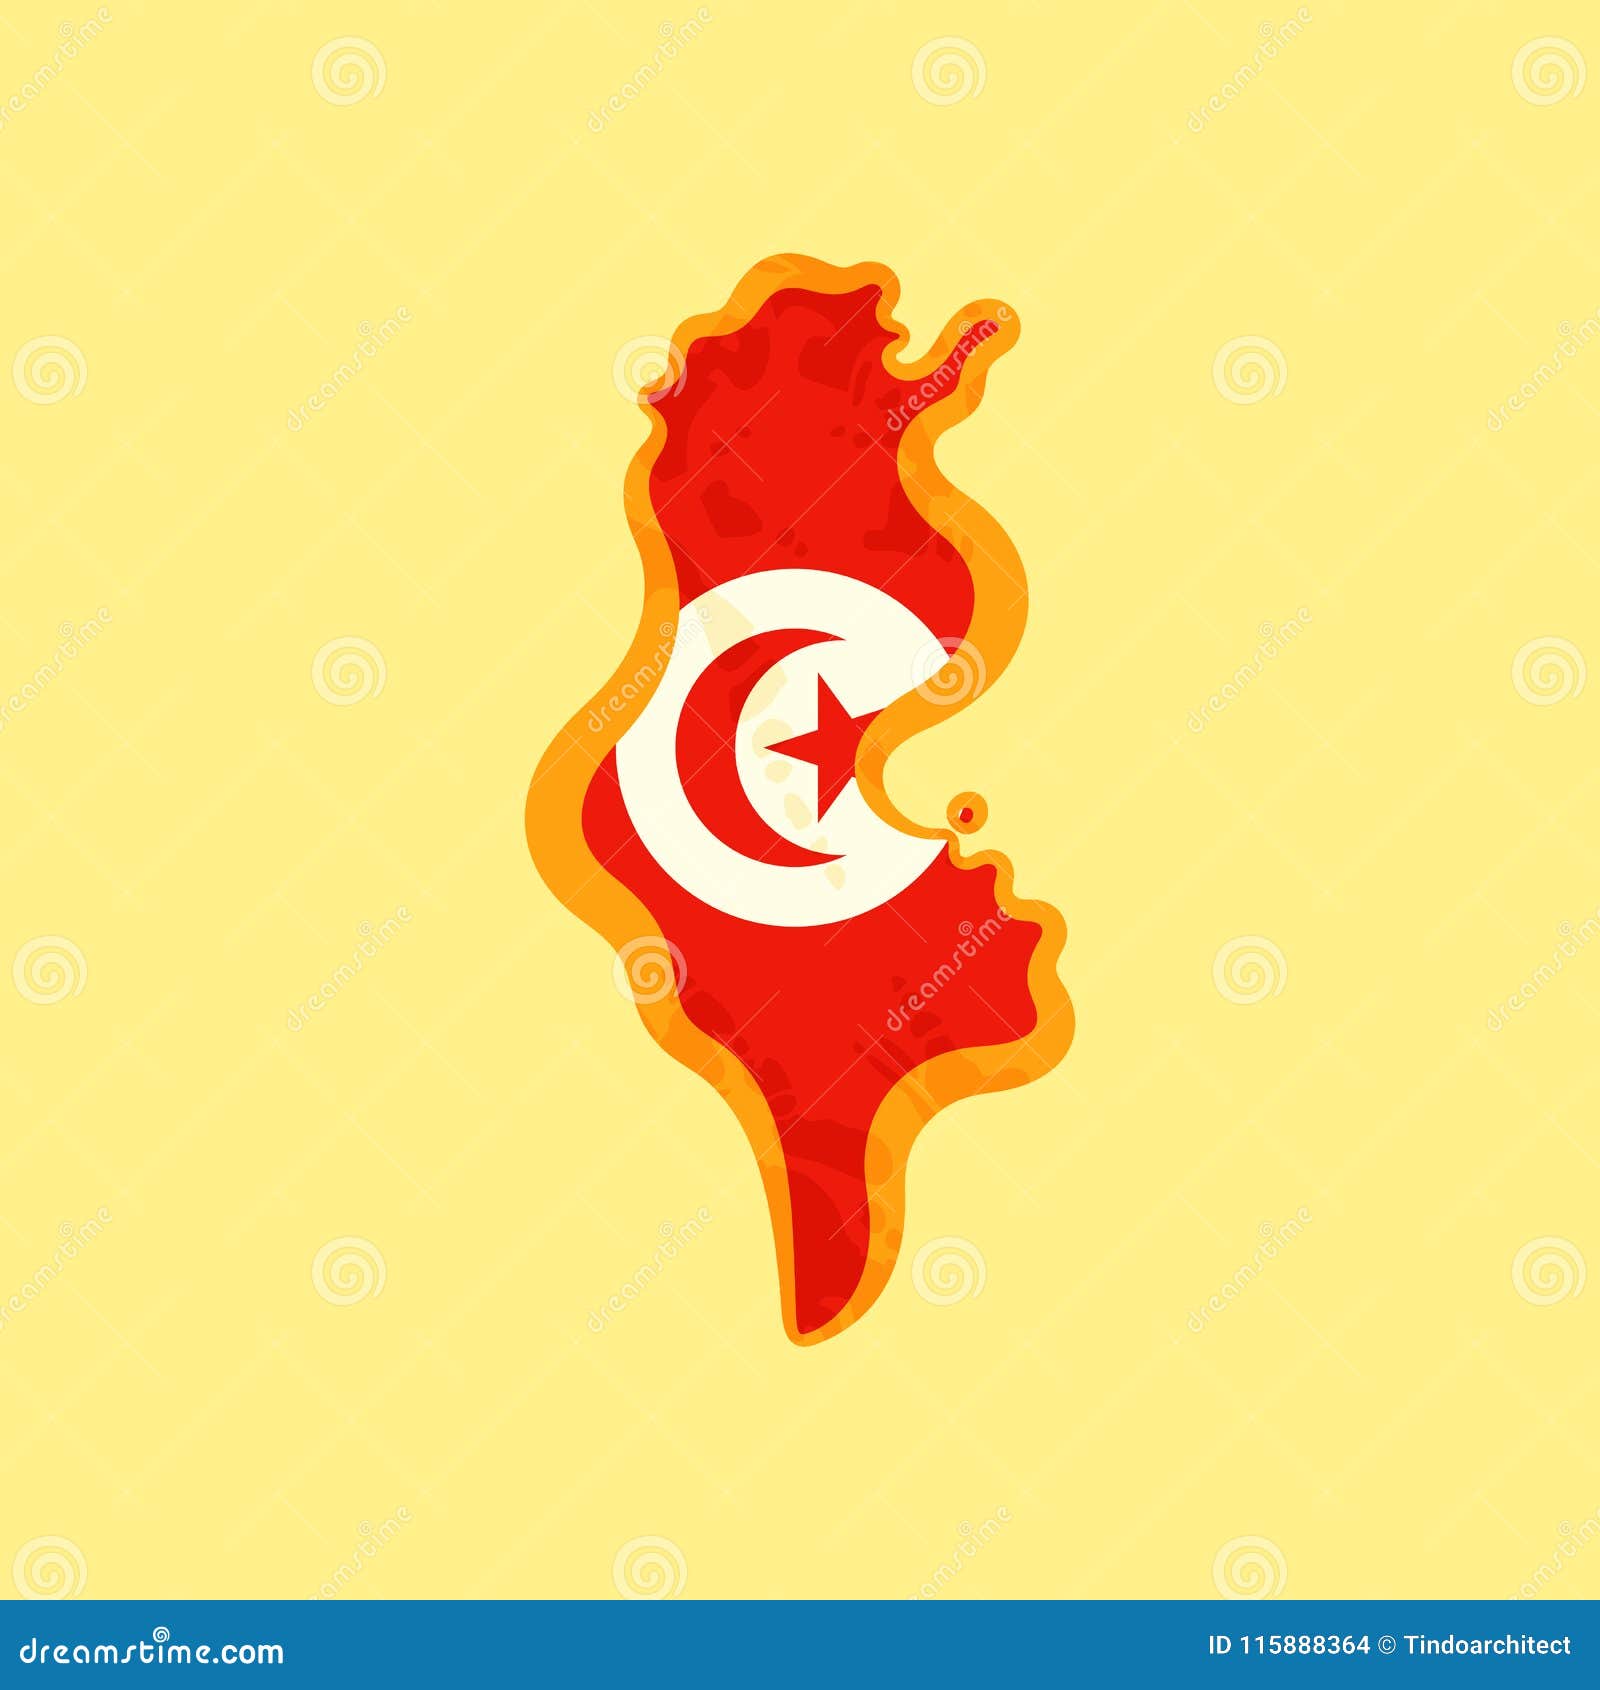 Tunísia - mapa colorido com bandeira tunisina. O mapa de Tunísia coloriu com bandeira tunisina e identificado por meio de linha dourada no estilo do vintage do grunge